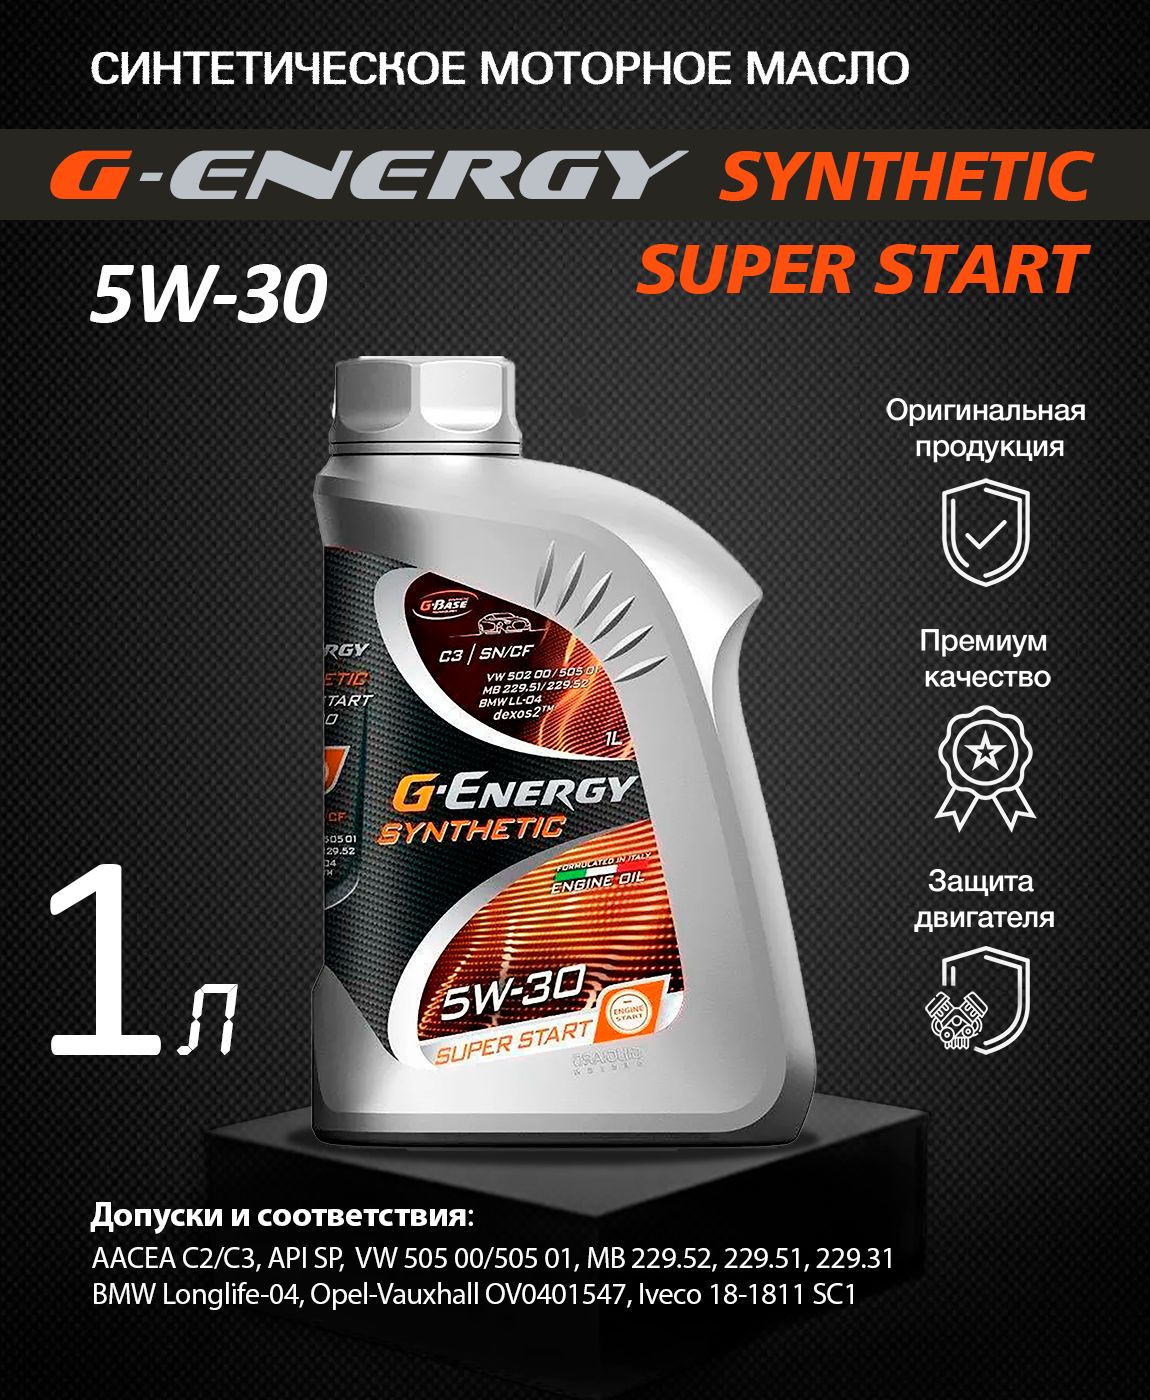 Масло g energy synthetic 5w 30. G Energy 5w40 Актив. G-Energy Synthetic Active 5w-30. G-Energy Synthetic Active 5w-40. Масло g-Energy Synthetic super start 5w-30.